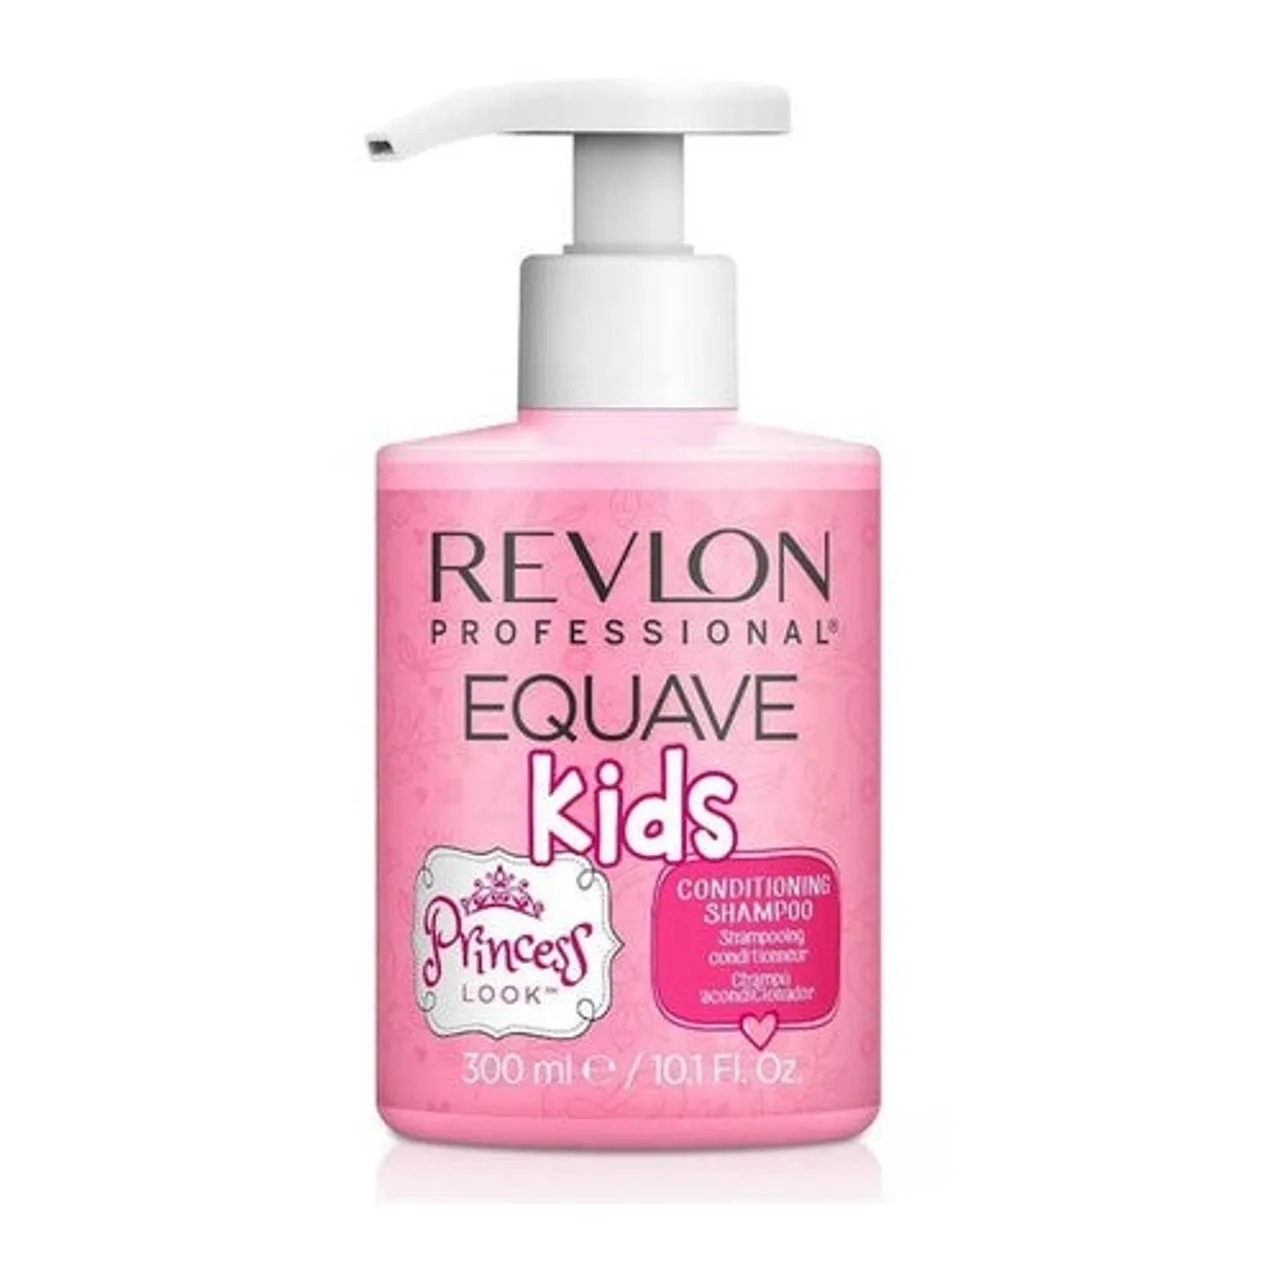 Revlon Equave Kids Princess Look 2-in-1 Shampoo 300 ml